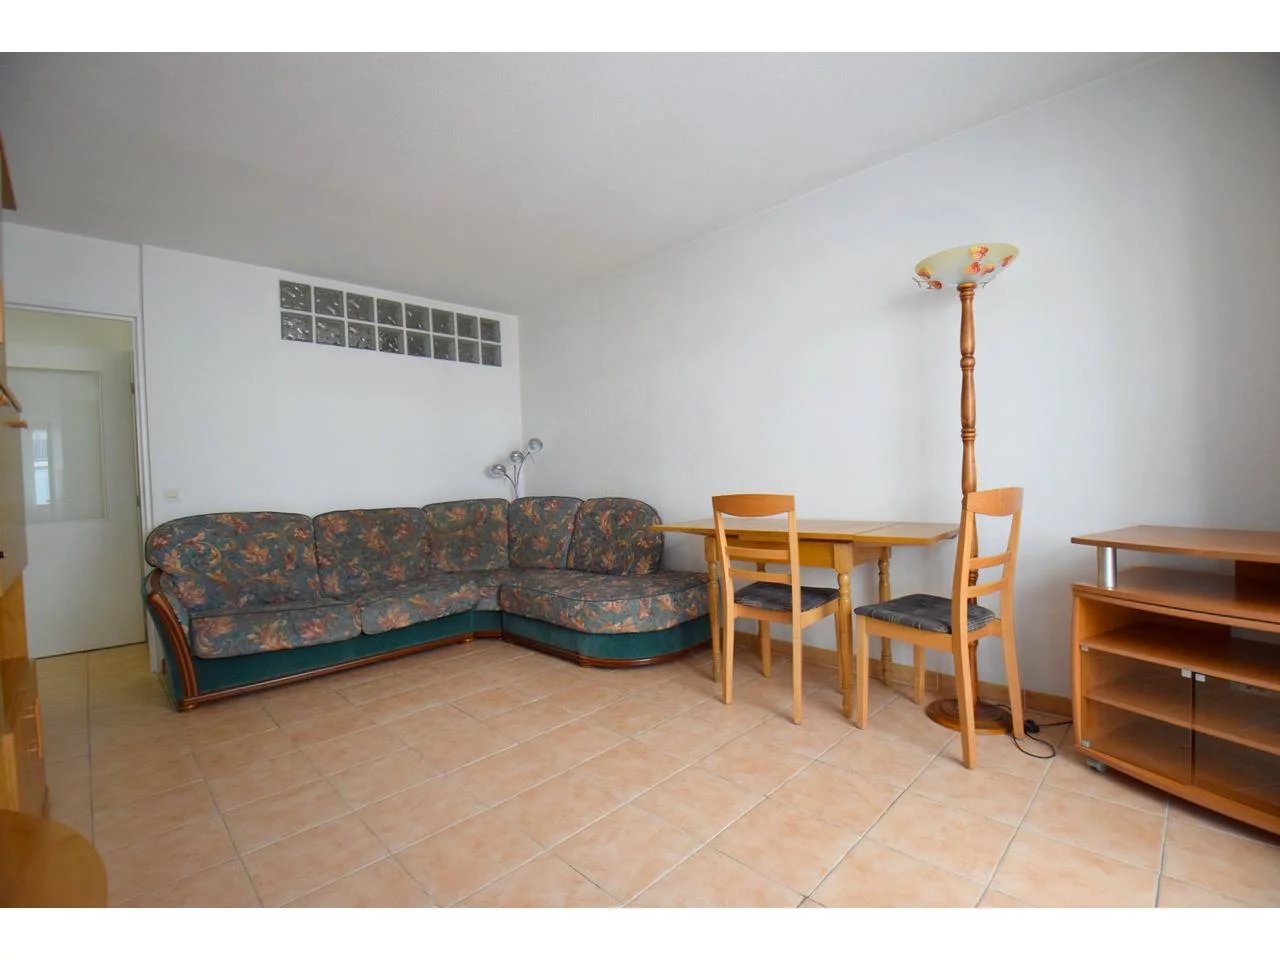 Appartement  2 Locali 50.03m2  In vendita   213 000 €